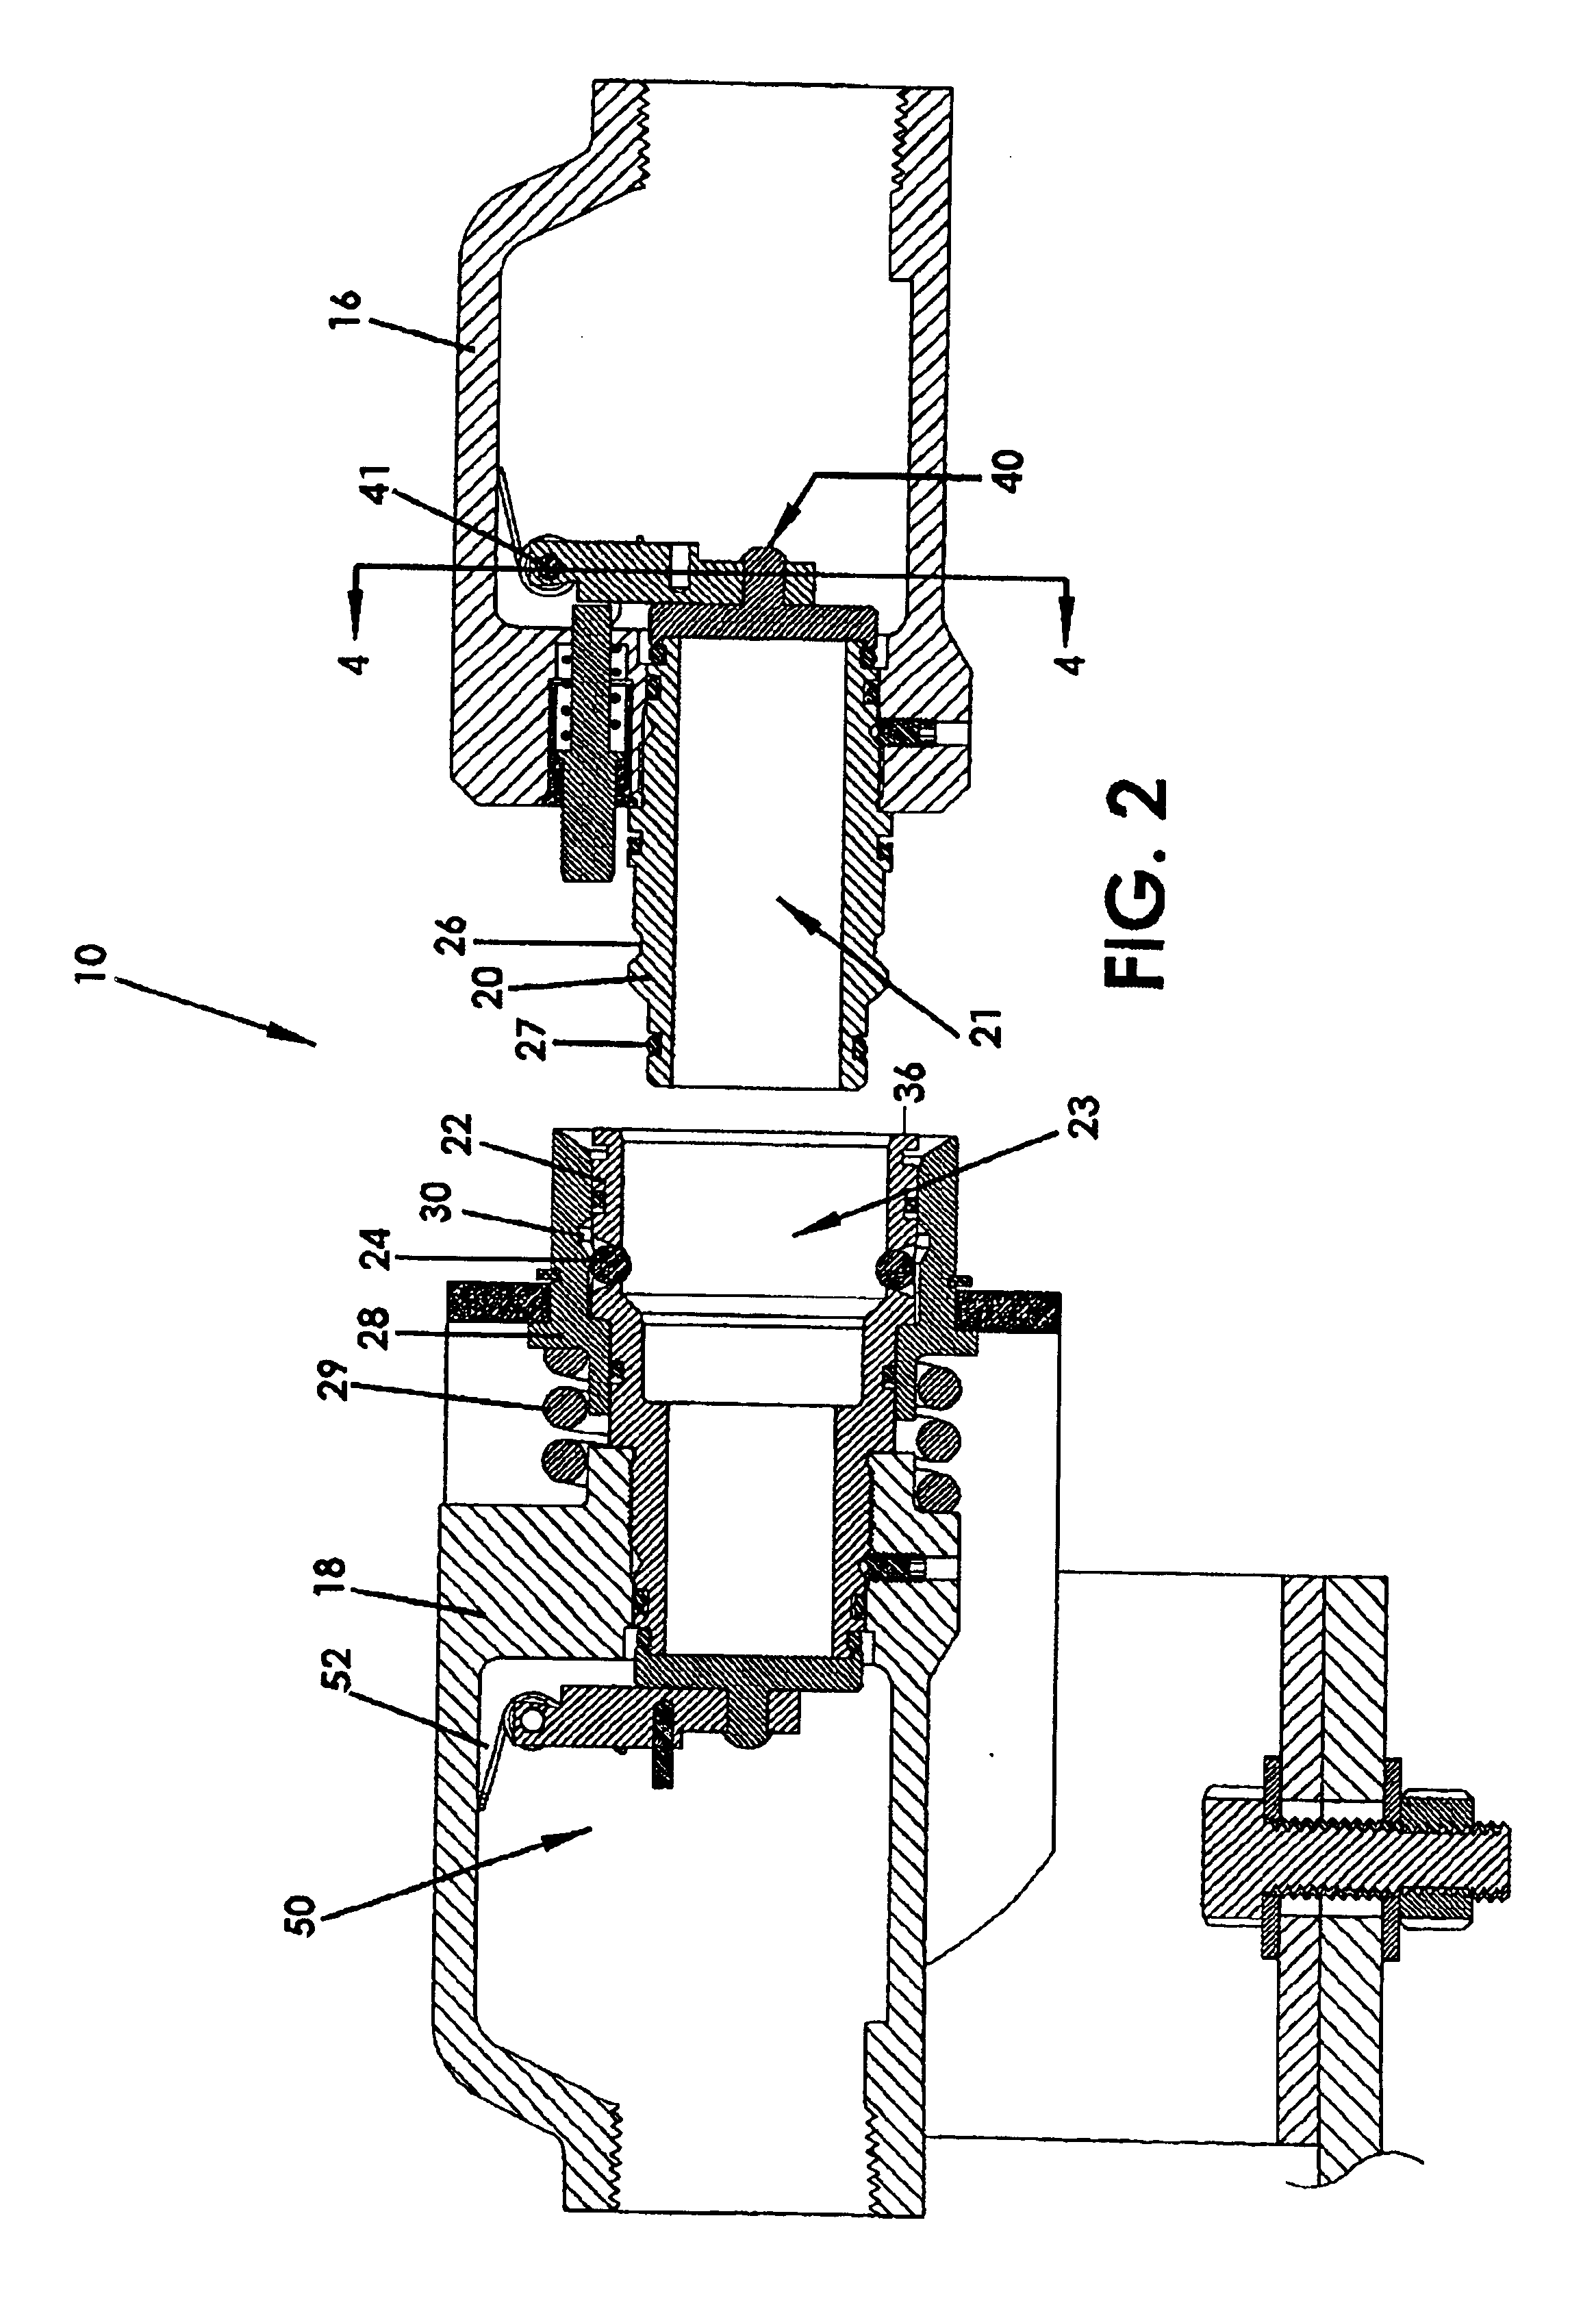 Breakaway coupling with flapper valve